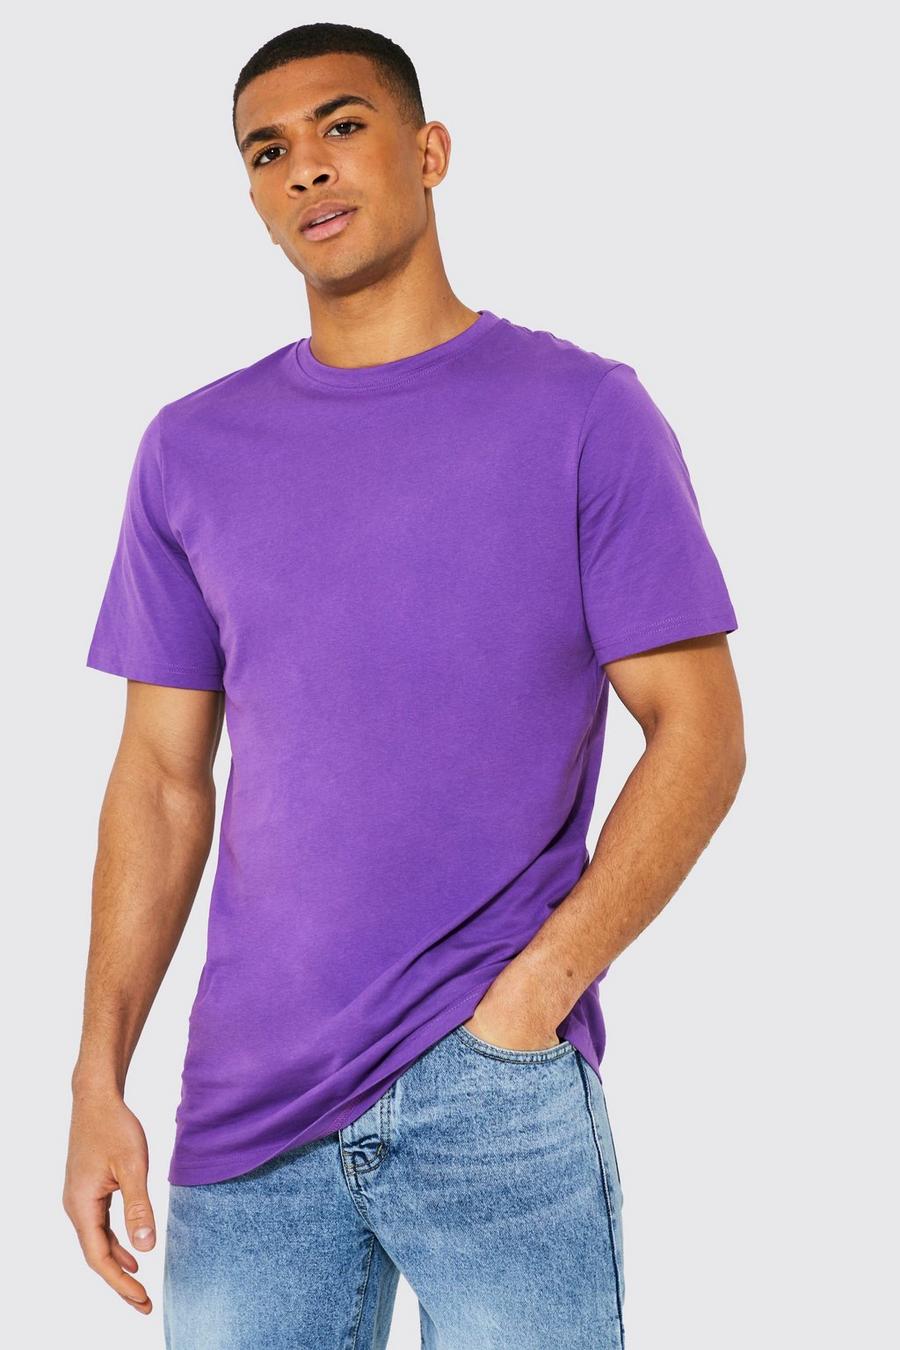 Langes Basic T-Shirt, Purple violett